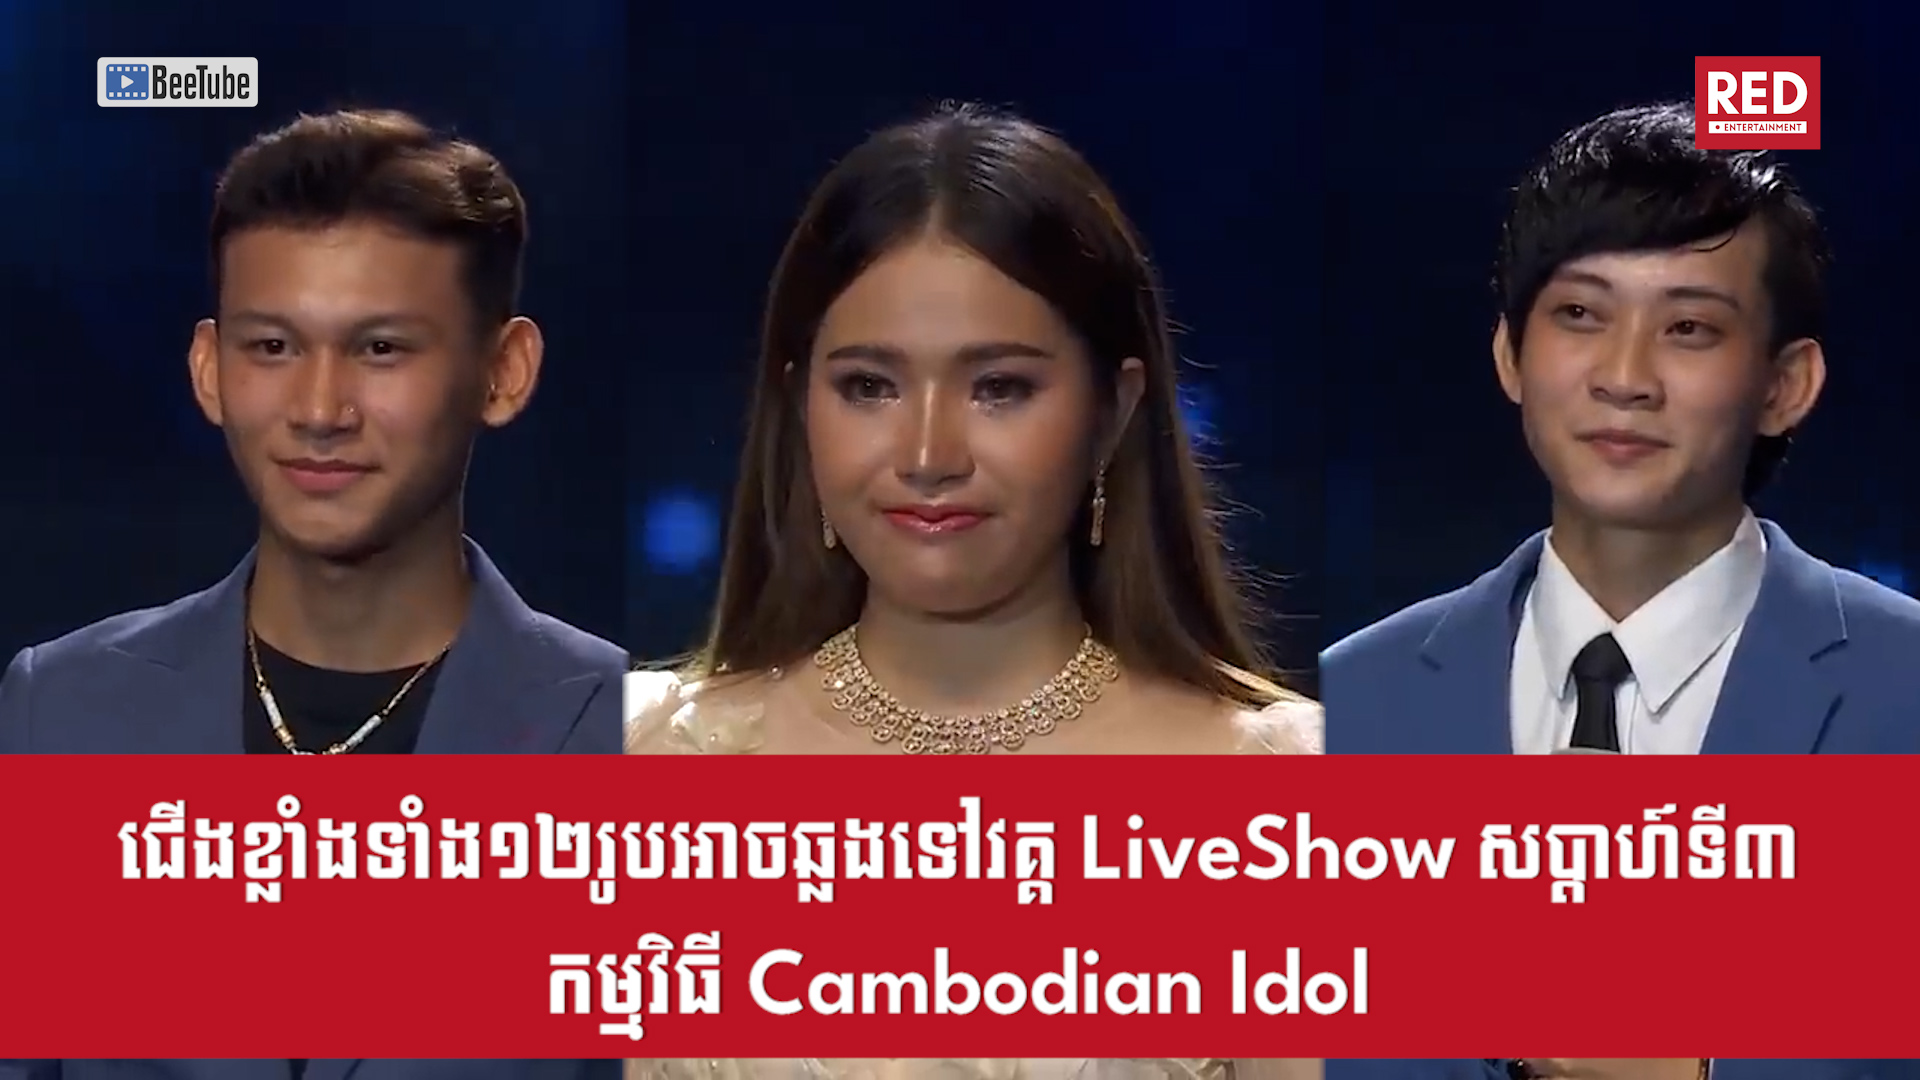 12 Cambodian Idol week 2